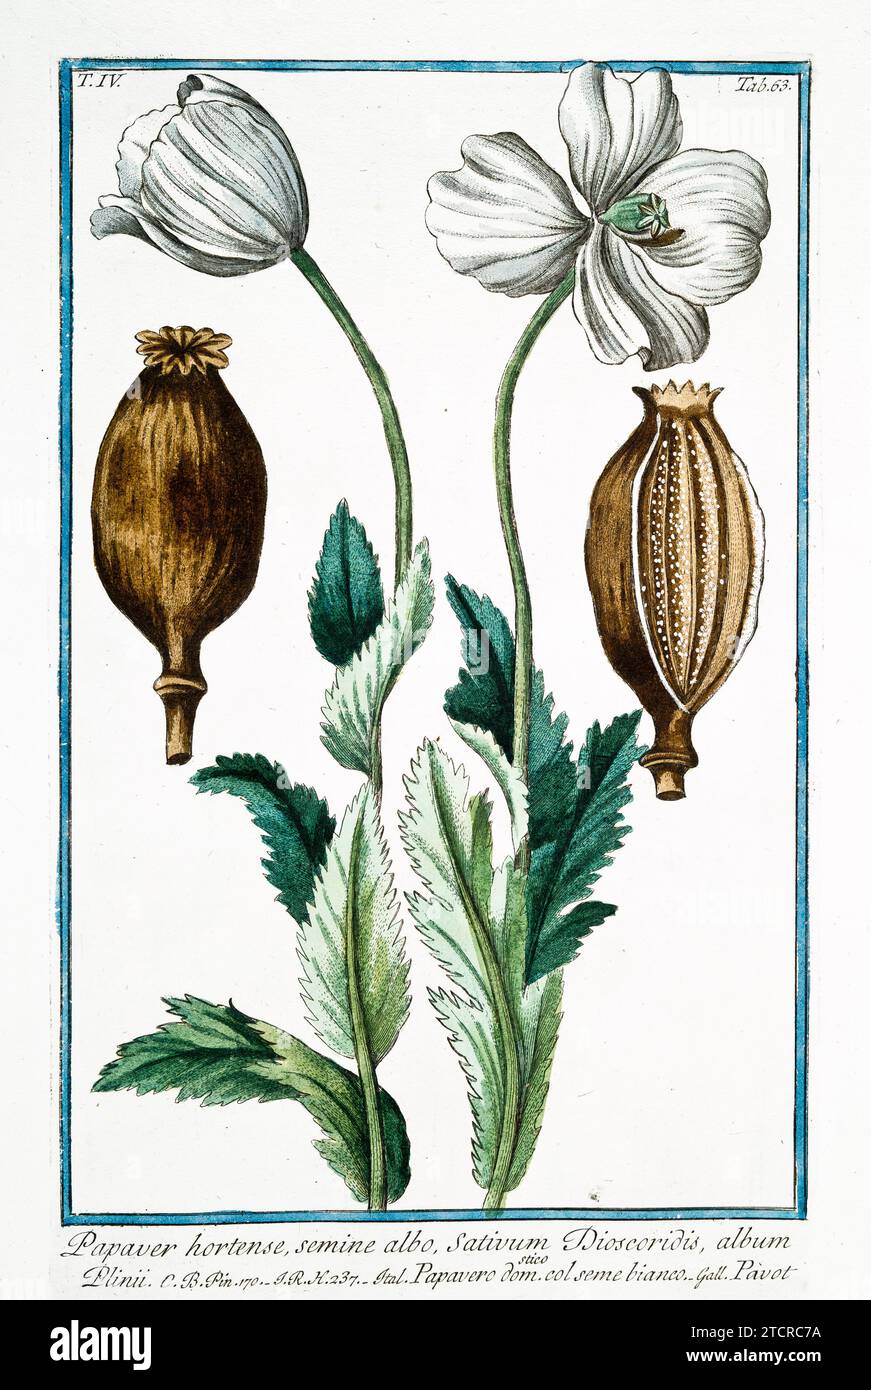 Vecchia illustrazione di Opium Poppy. Di G. Bonelli su Hortus Romanus, publ. N. Martelli, Roma, 1772 – 93. Foto Stock